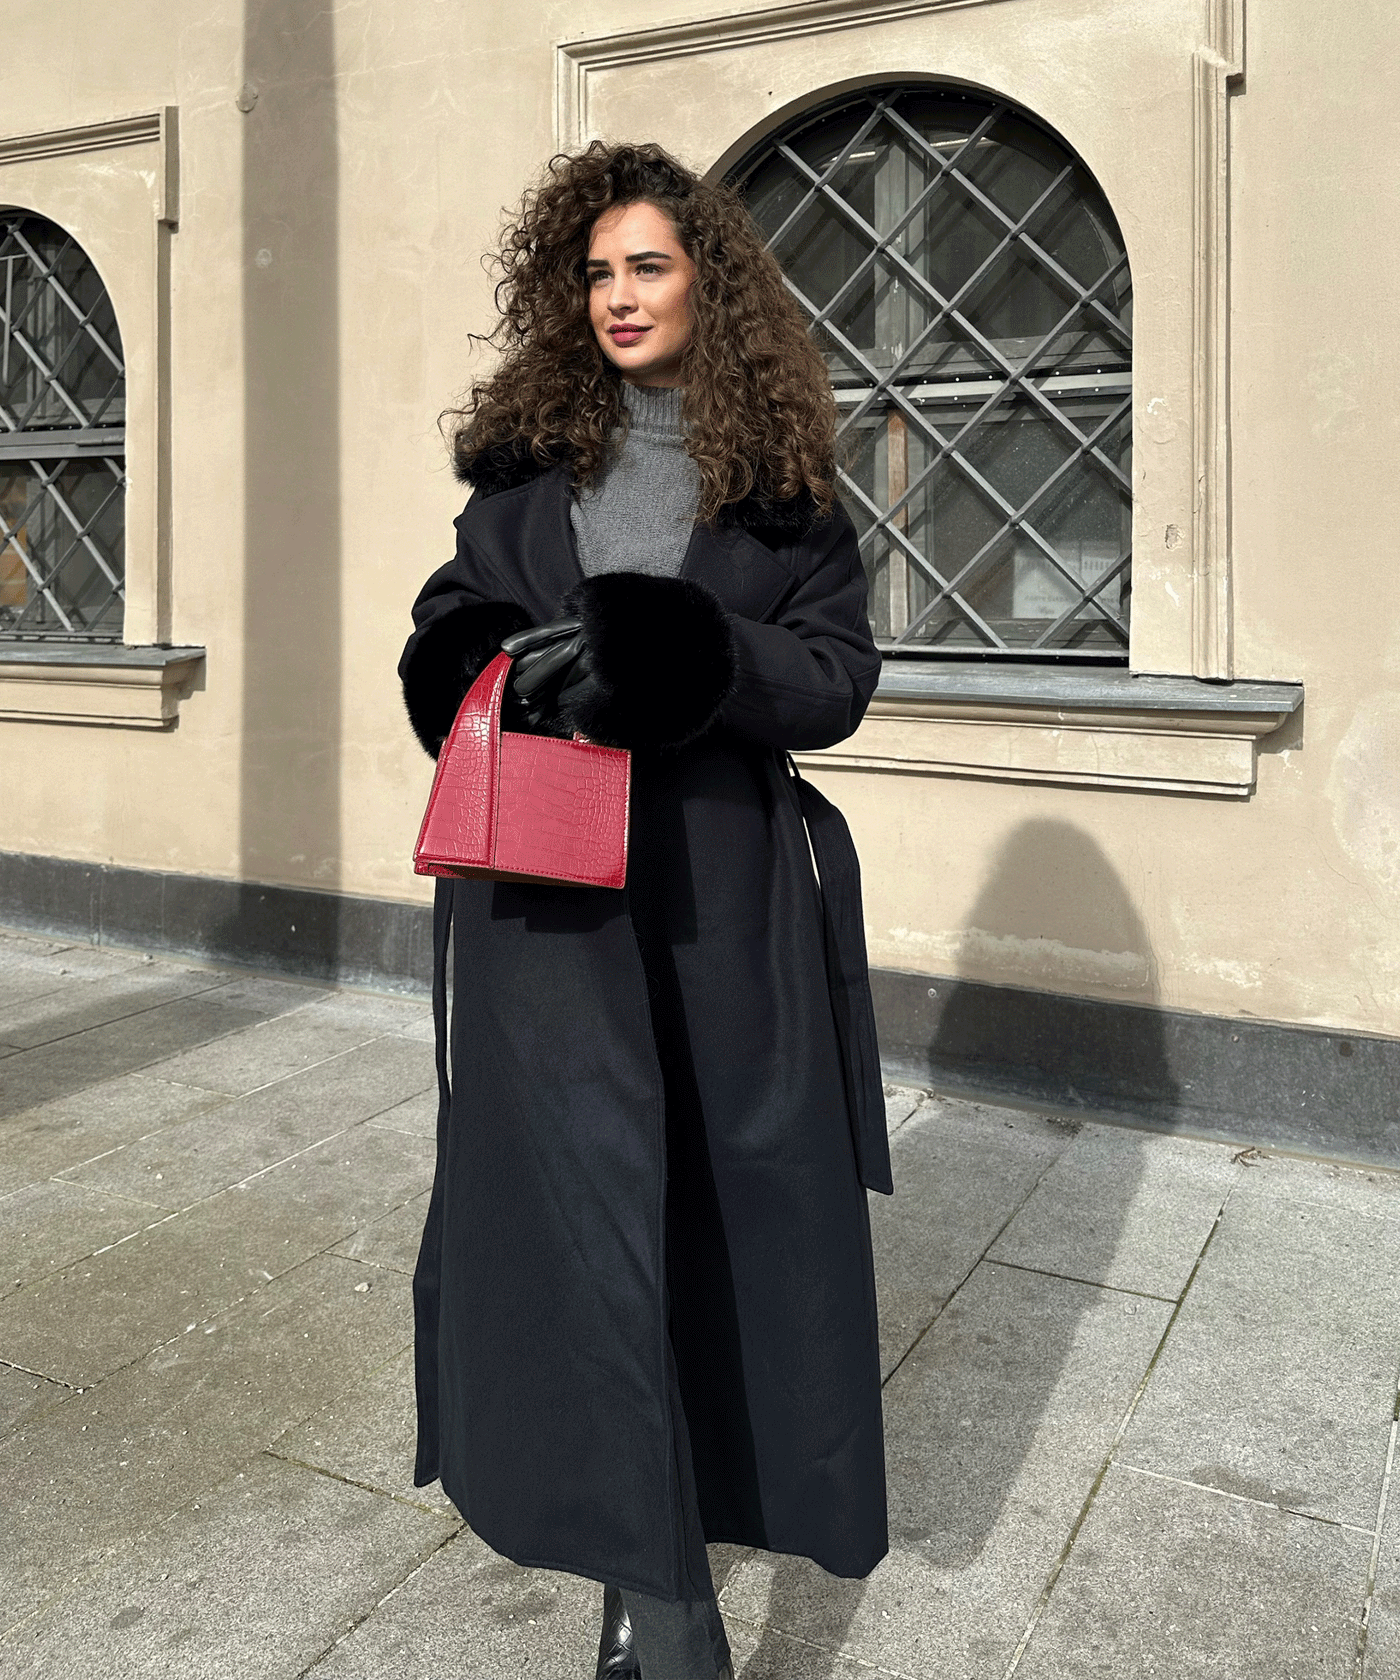 Jolie coat with fur details black